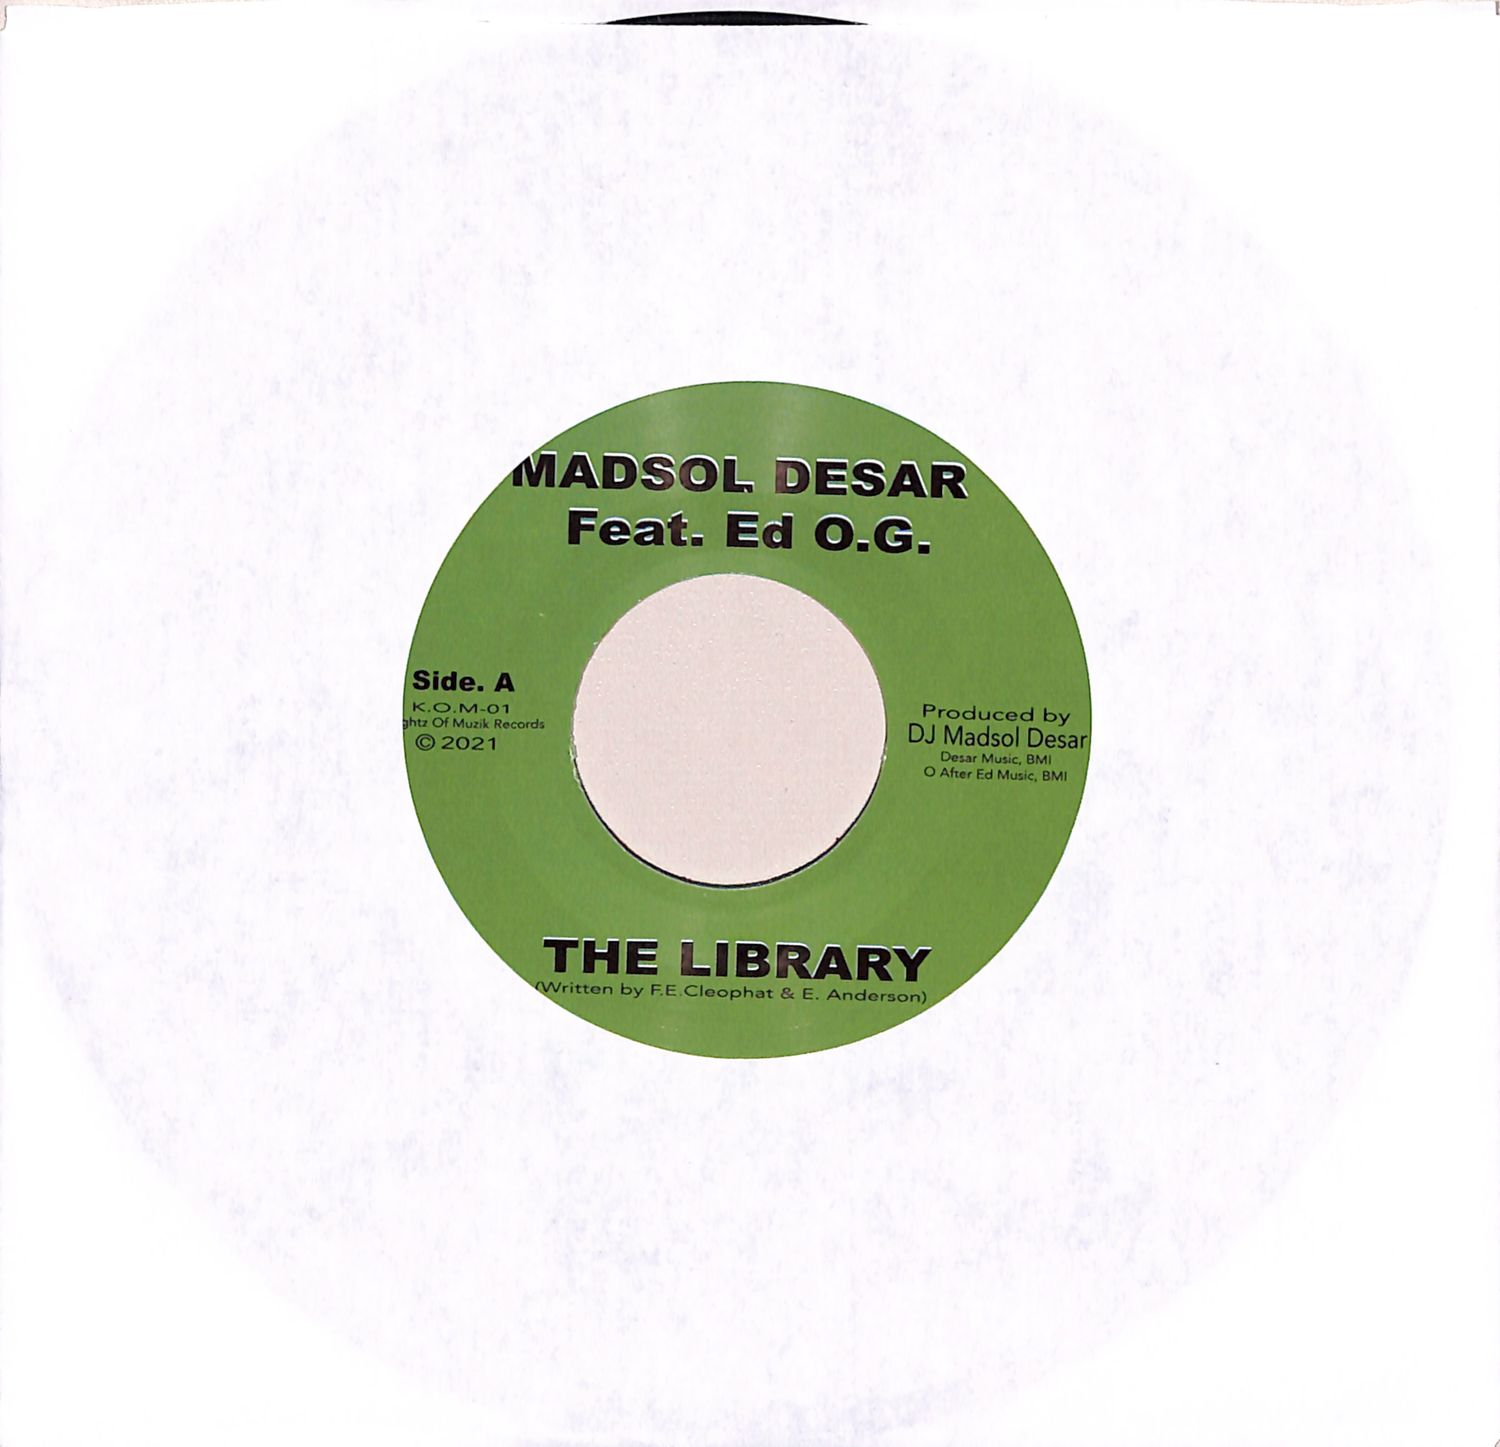 Madsol Desar & Ed O.G. - THE LIBRARY 